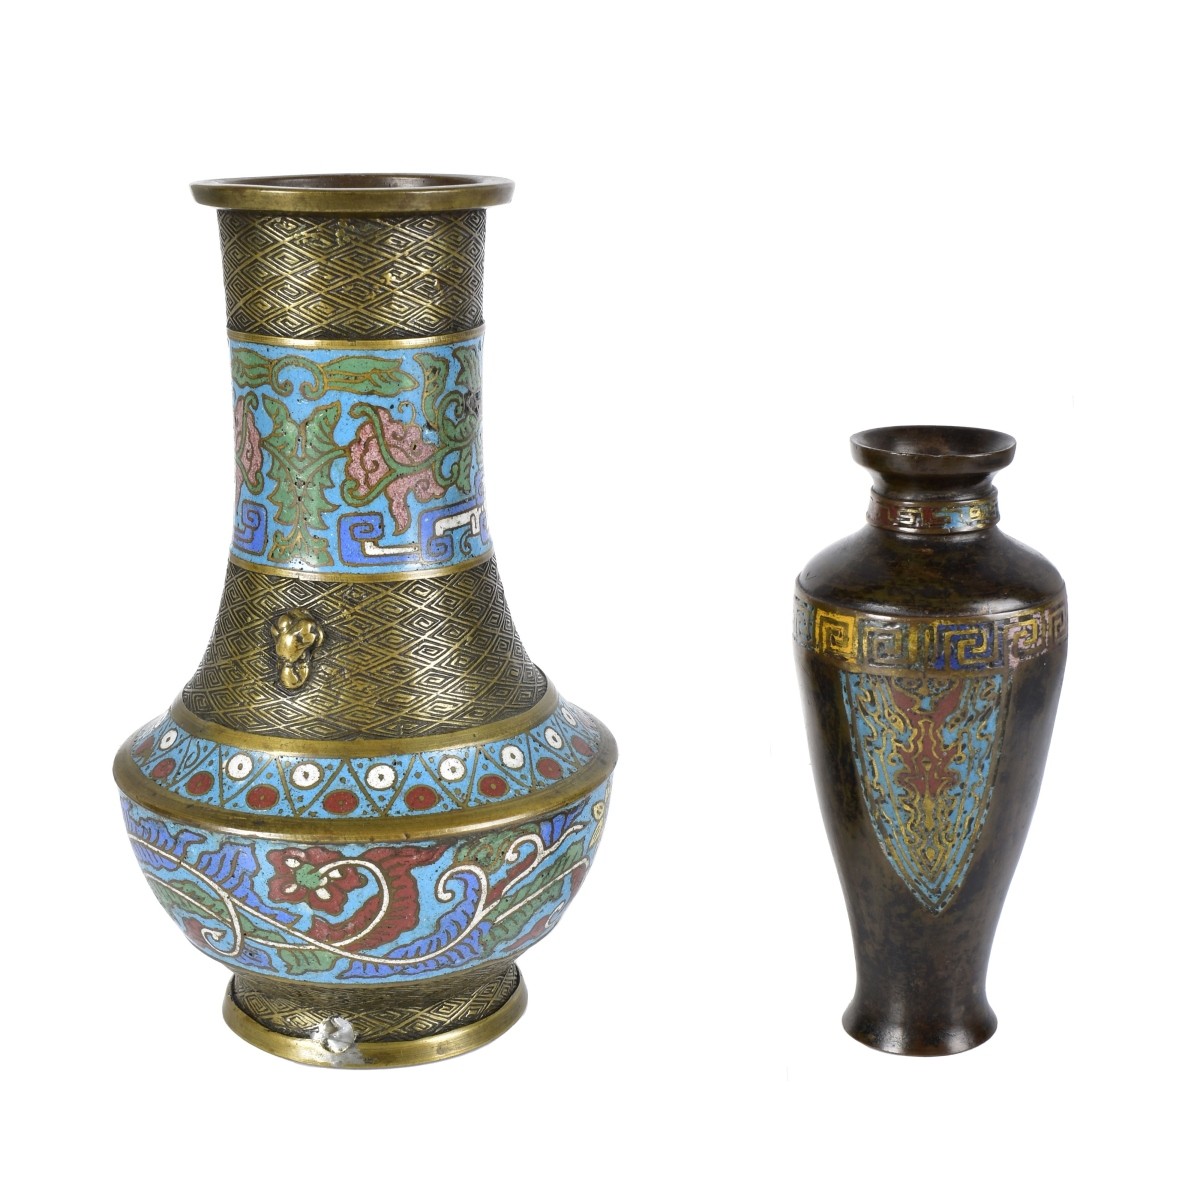 Two Antique Japanese Cloisonne Vases